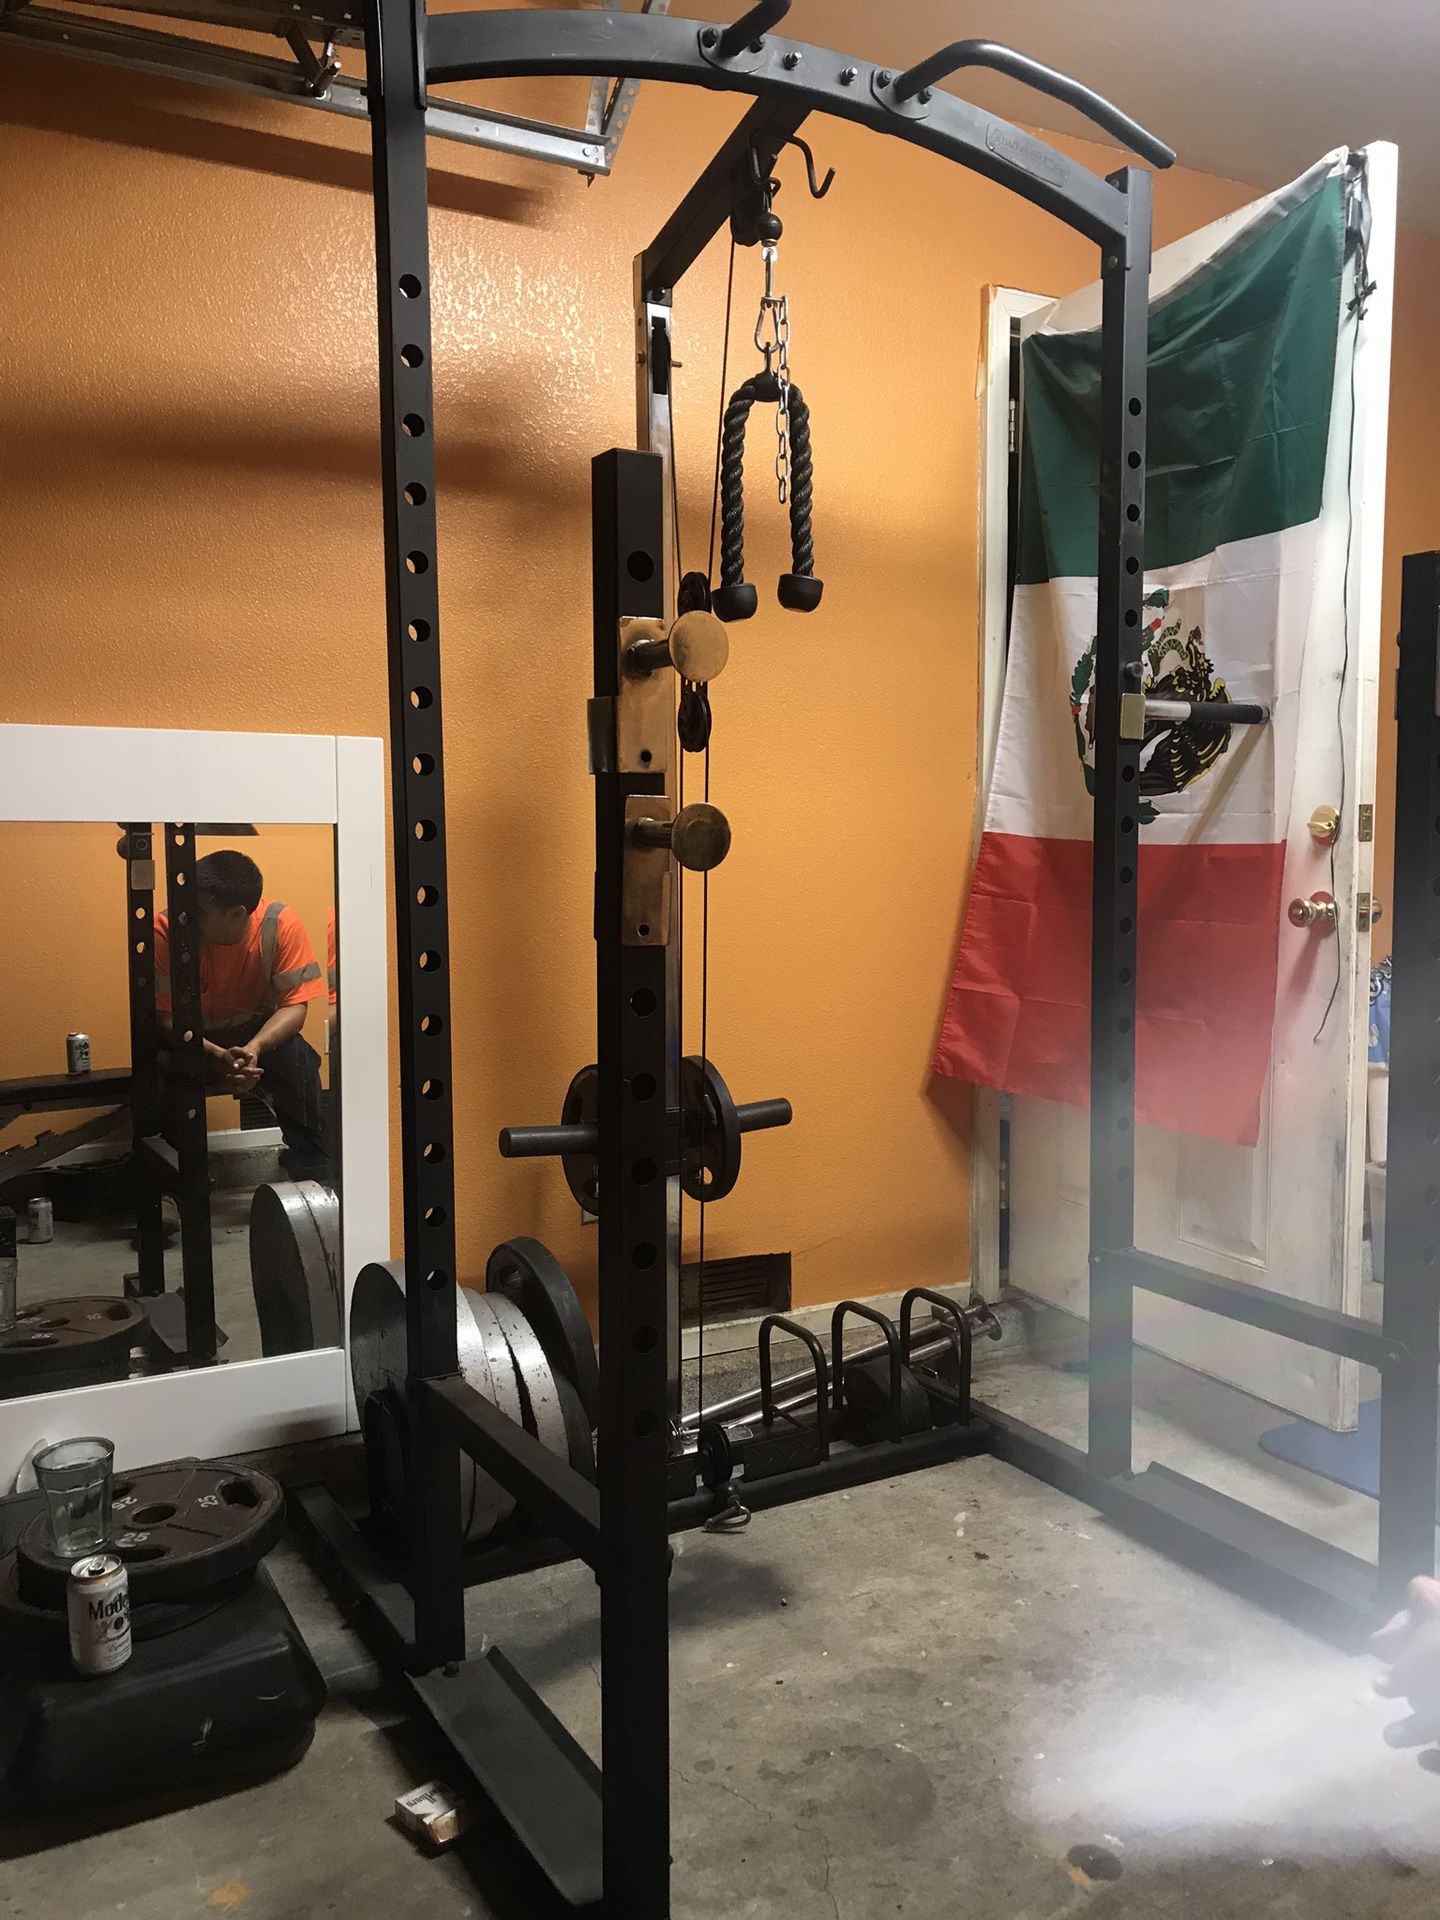 Weights, rack, bench press